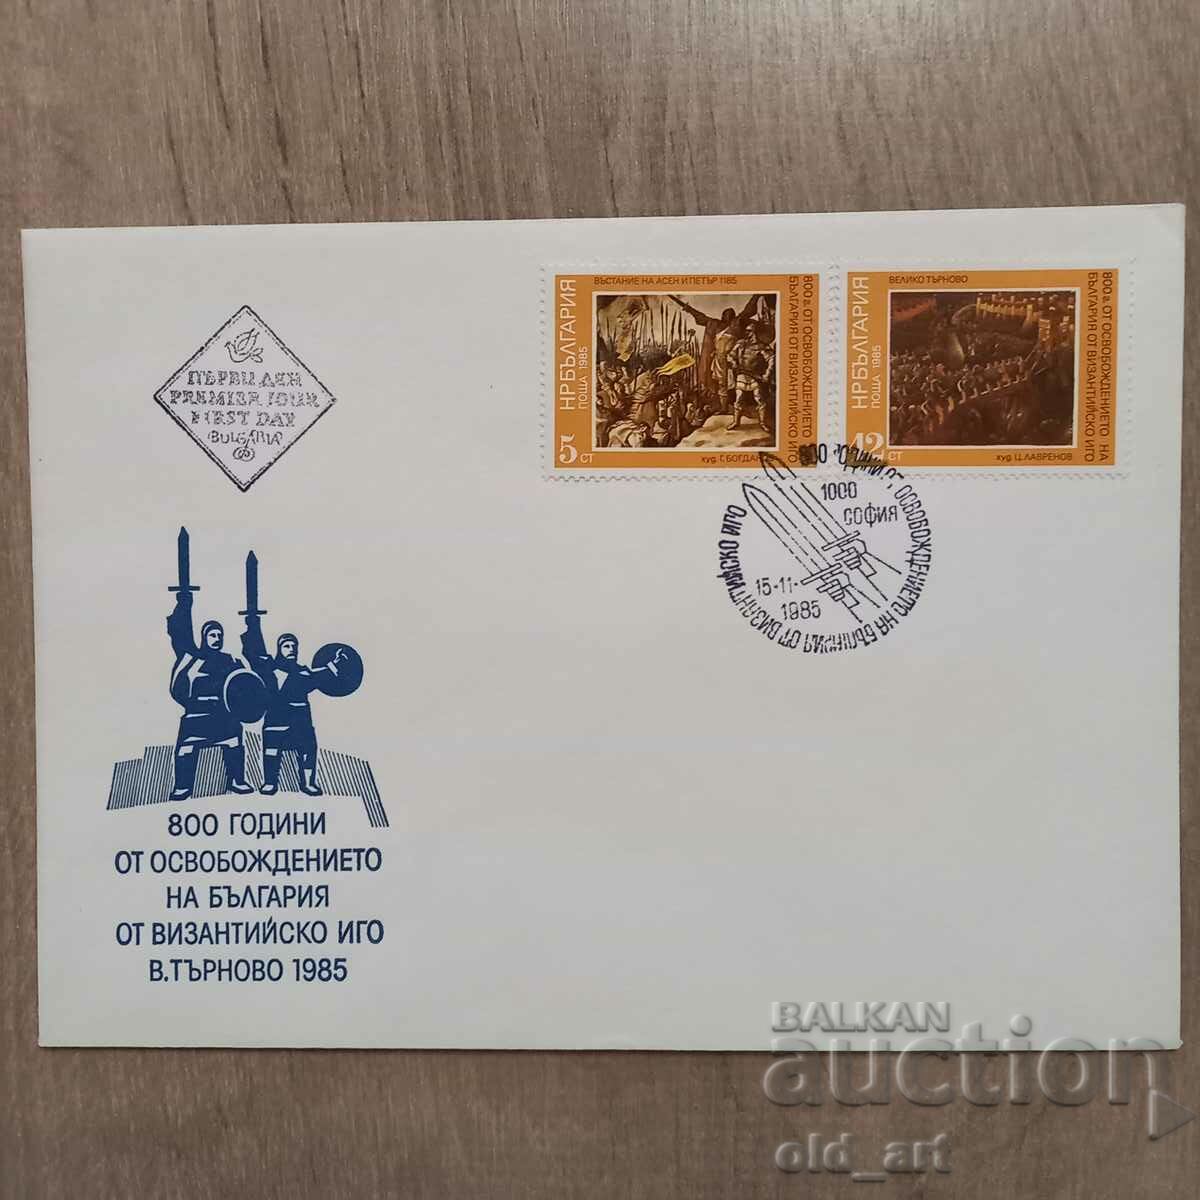 Postal envelope - 800 years of Osv. of Bulgaria from Byzantium. yoke